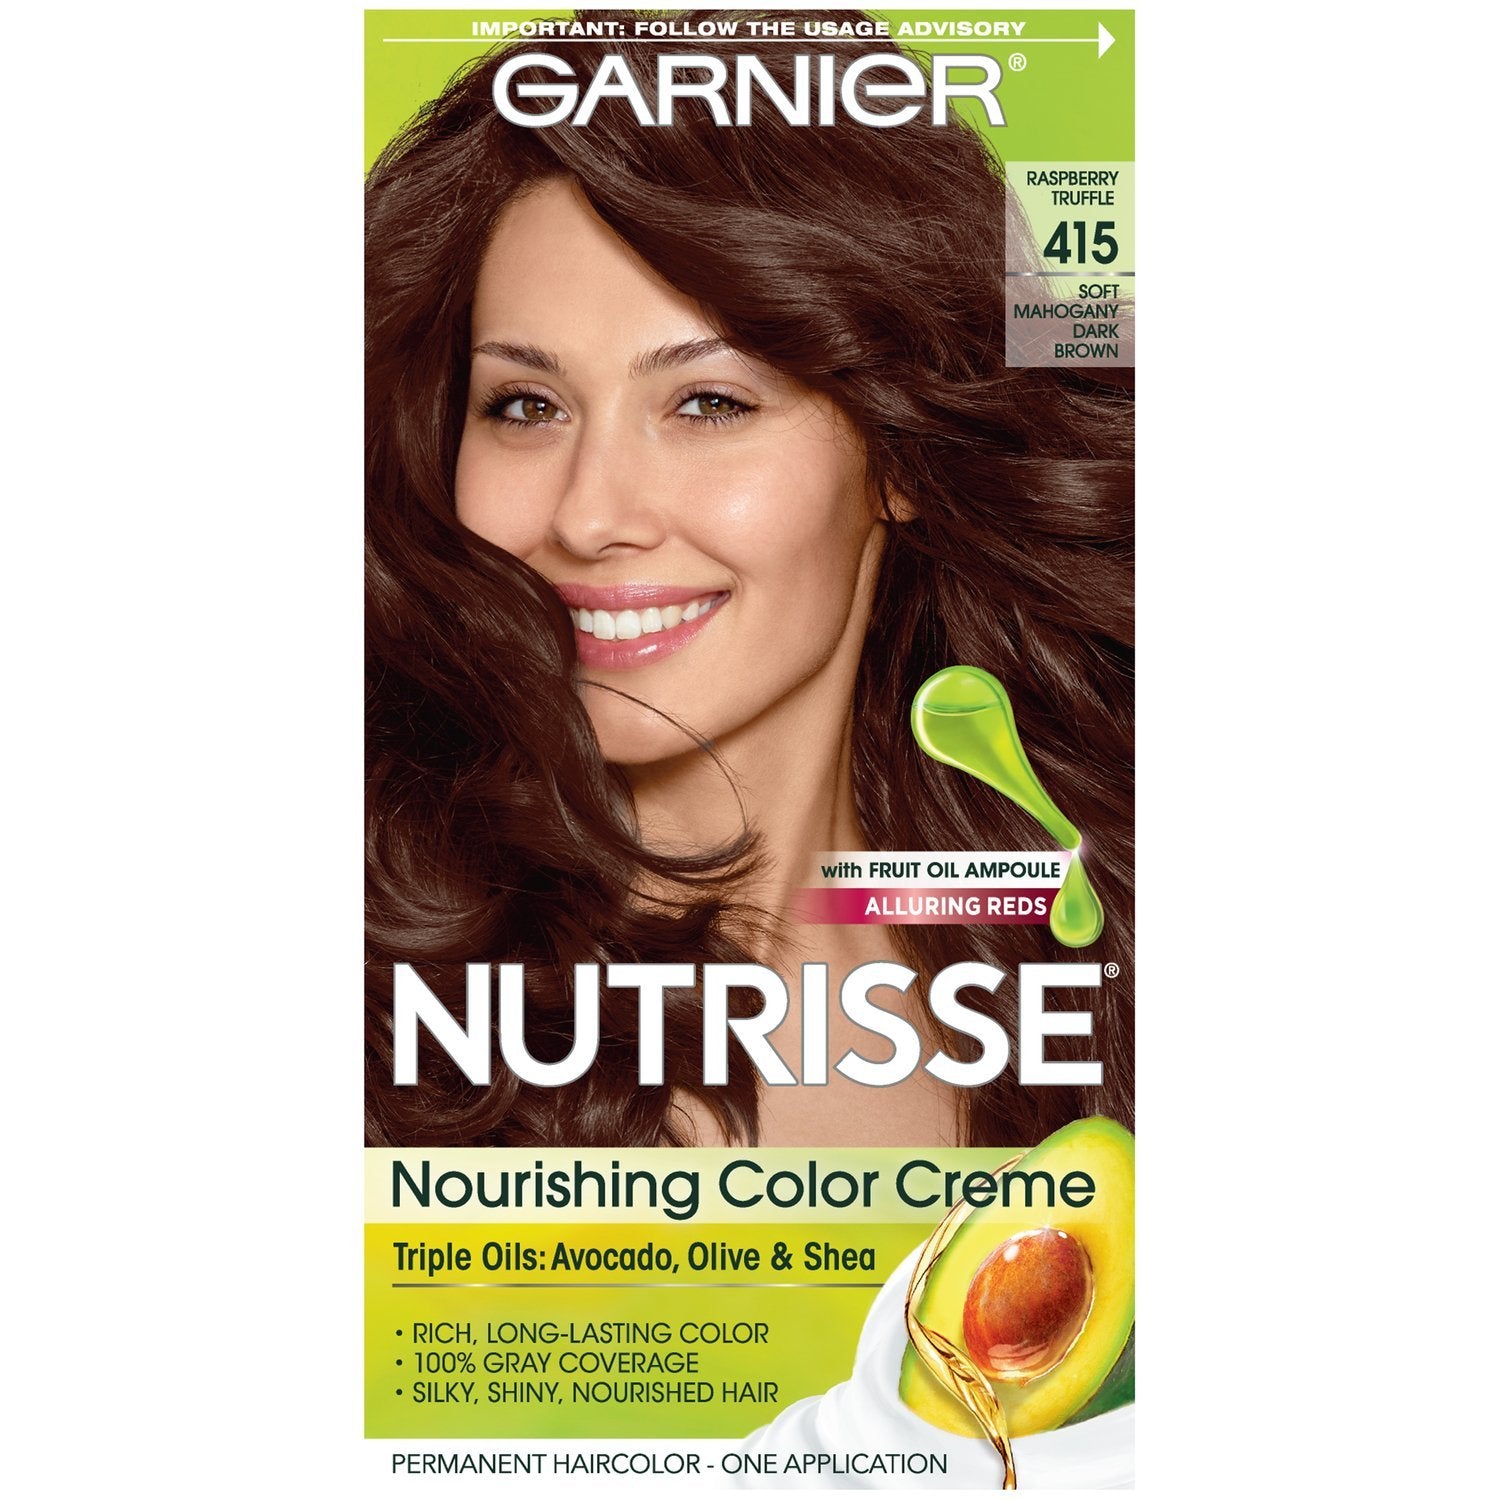 Garnier Nutrisse Nourishing Hair Color Creme, 415 Soft Mahogany Dark Brown (Raspberry Truffle), 1 kit-CaribOnline